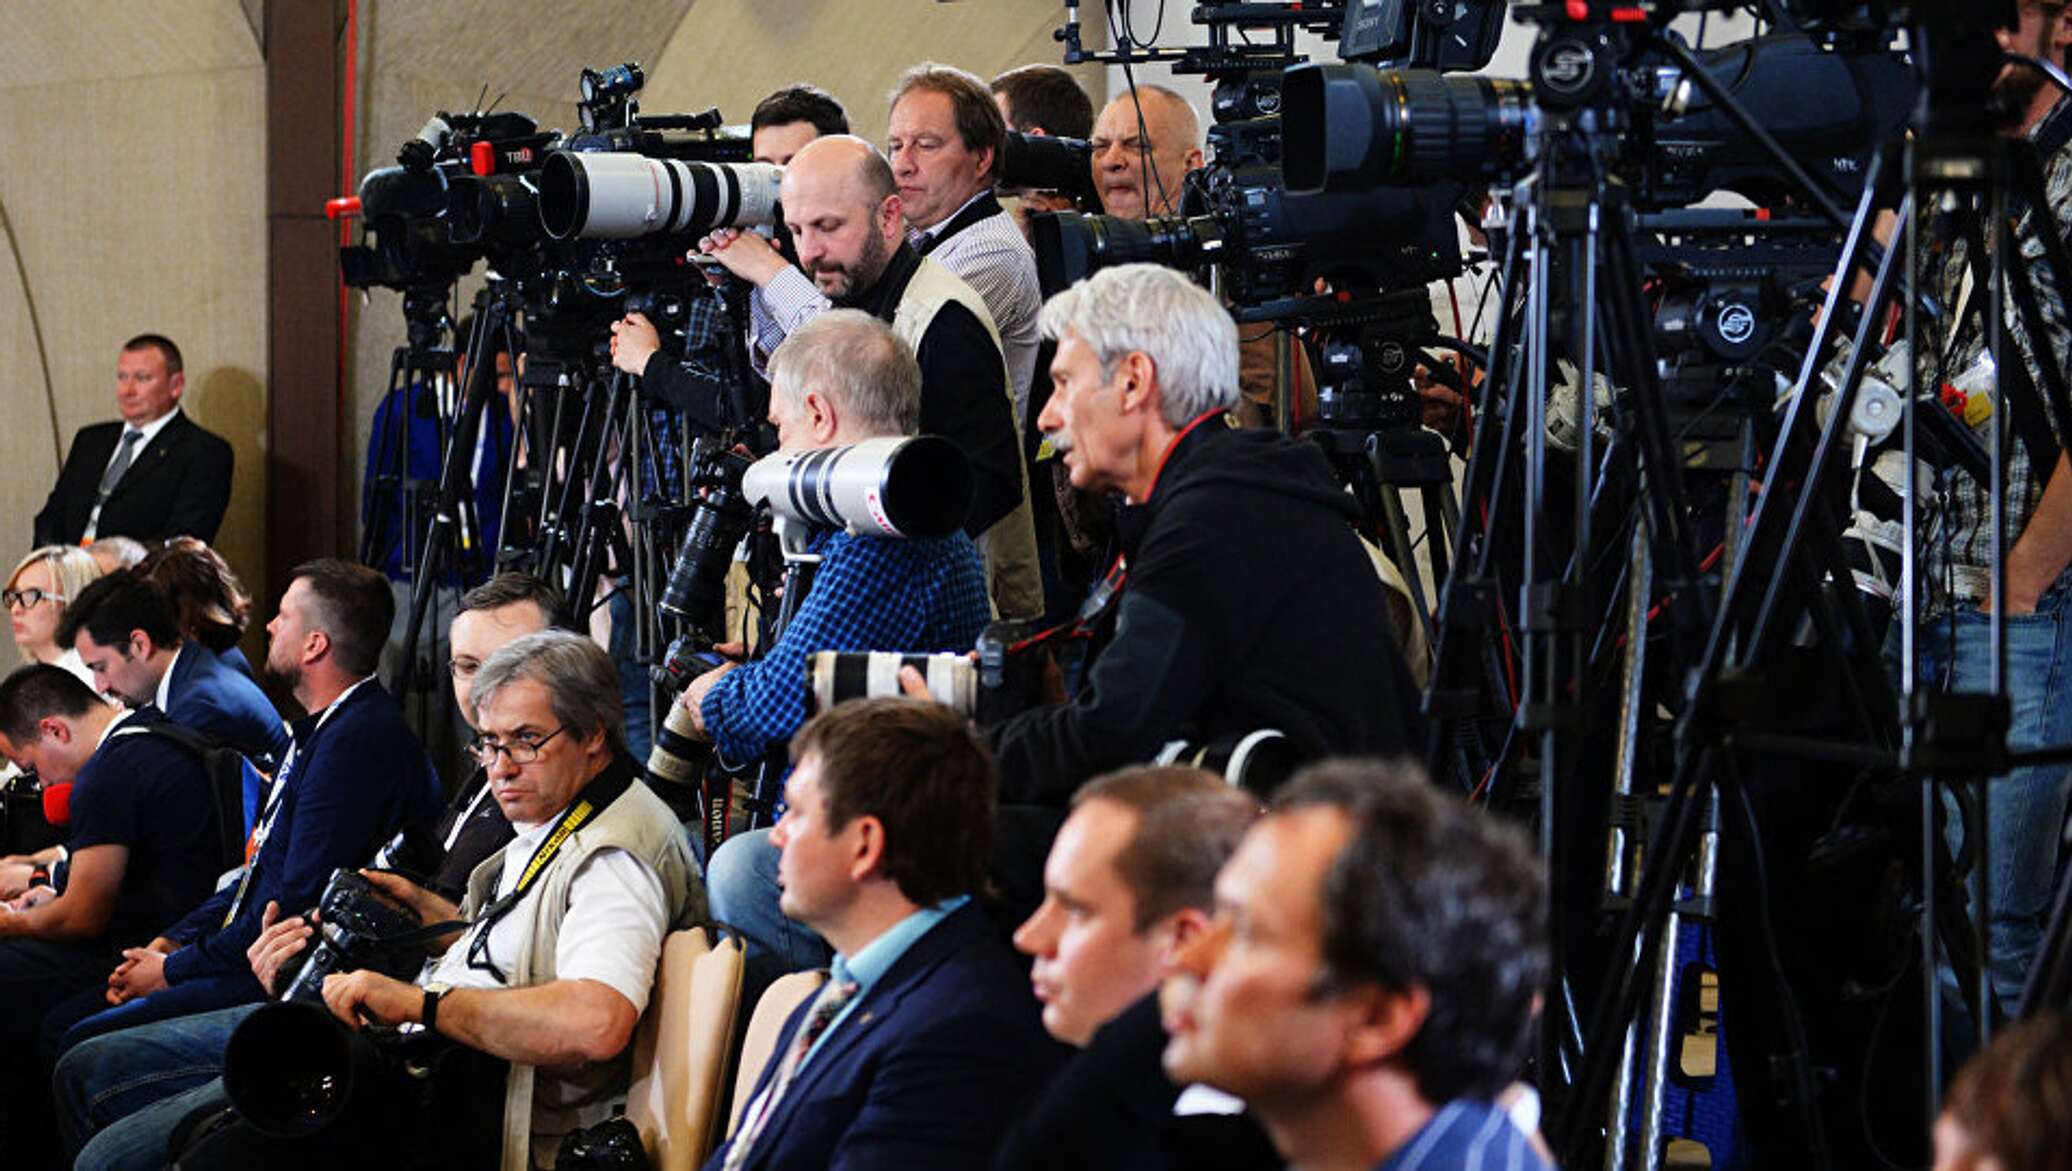 Сми в лентах. Пресс-конференция журналисты. Конференция журналистов. Российская журналистика. Репортер на пресс конференции.